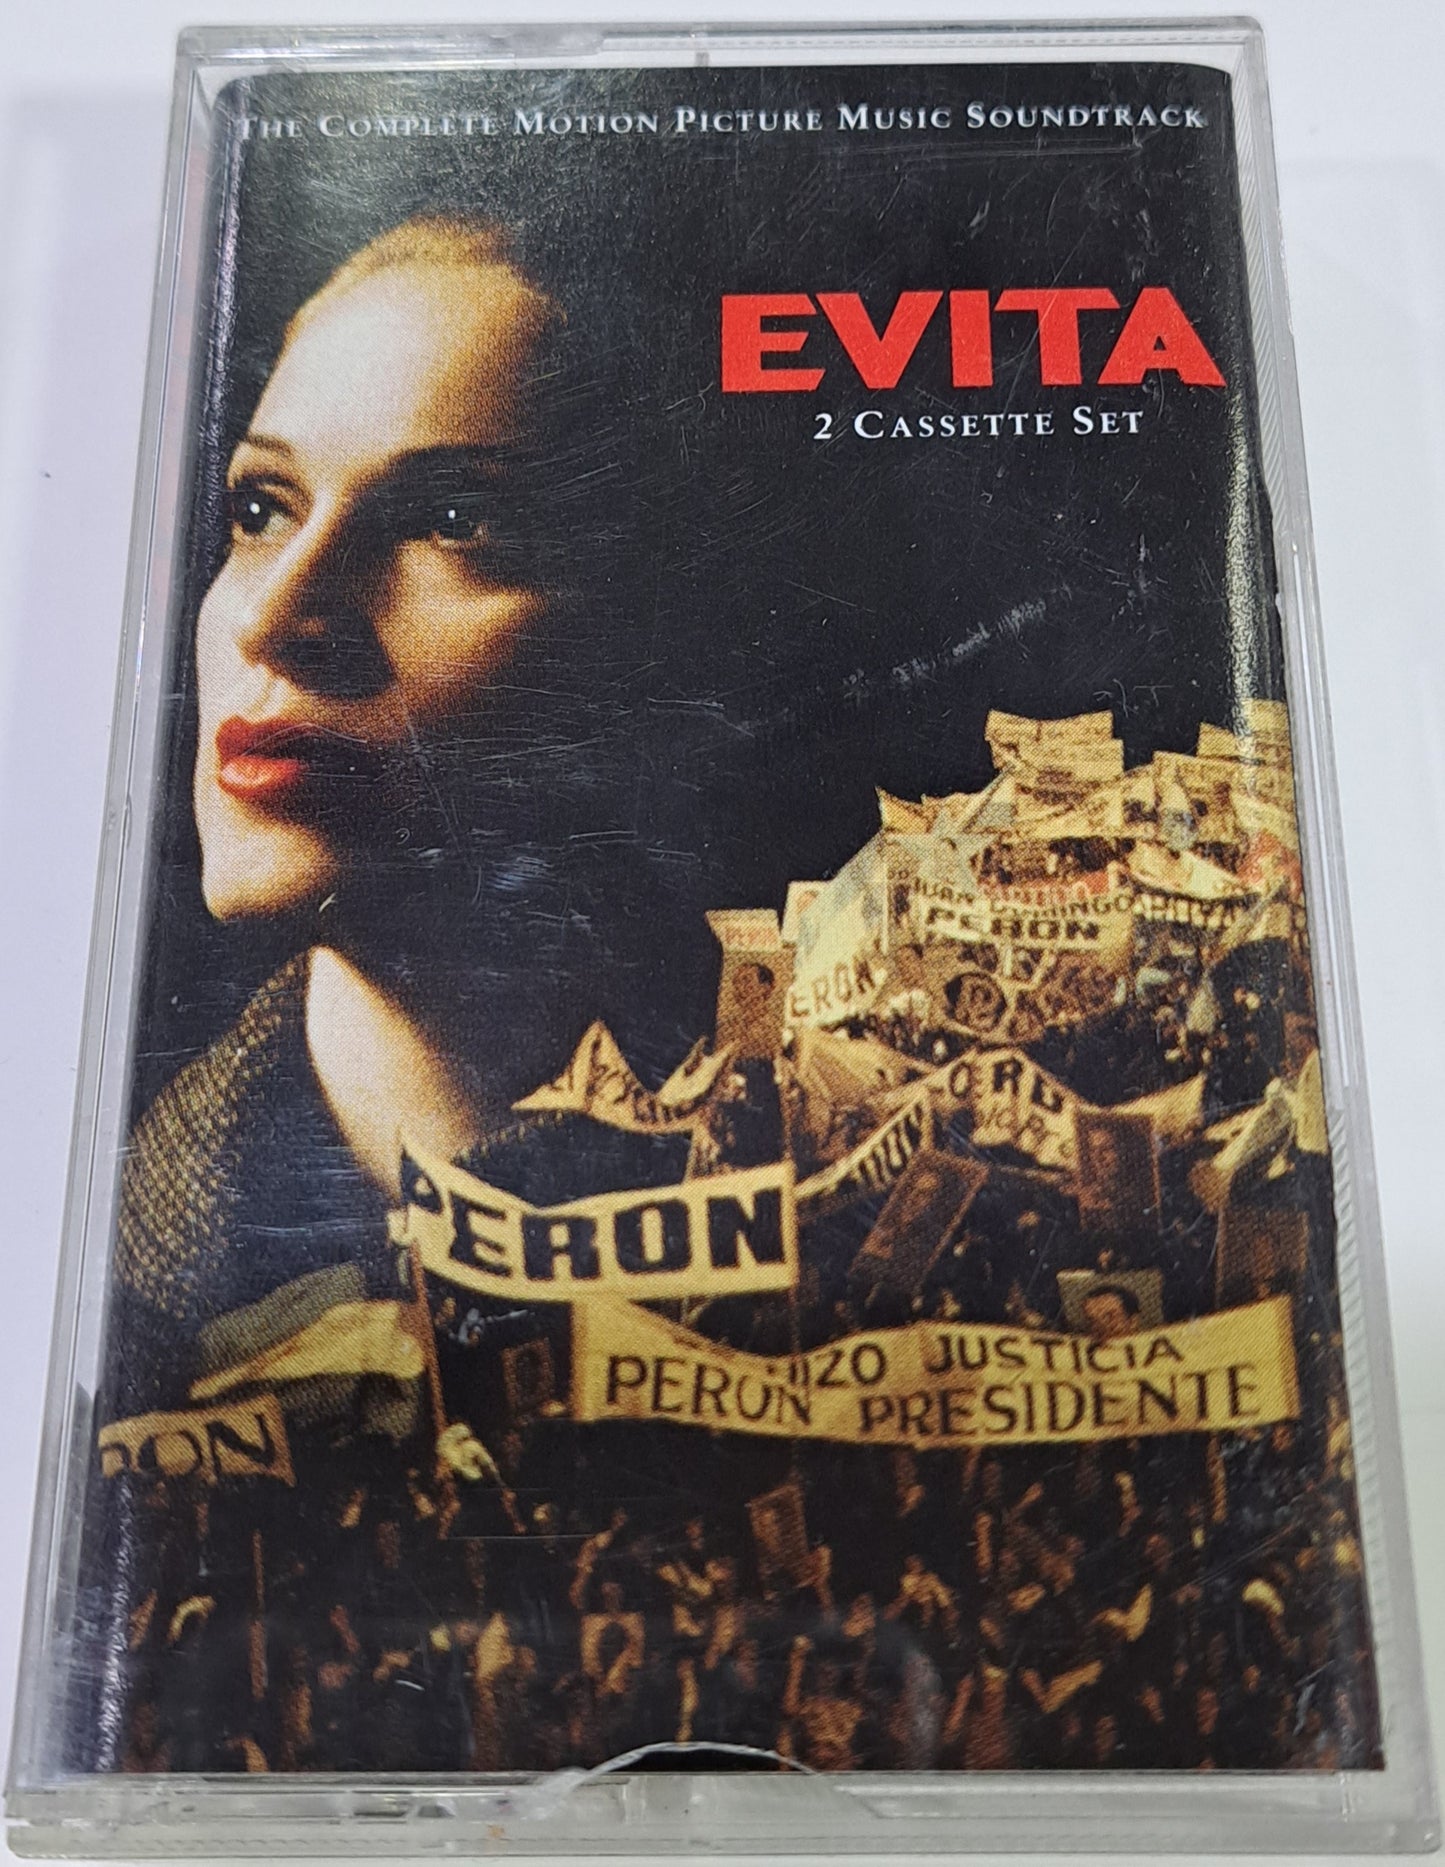 EVITA - THE COMPLETE MOTION PICTURE MUSIC SOUNDTRACK  CASSETTE